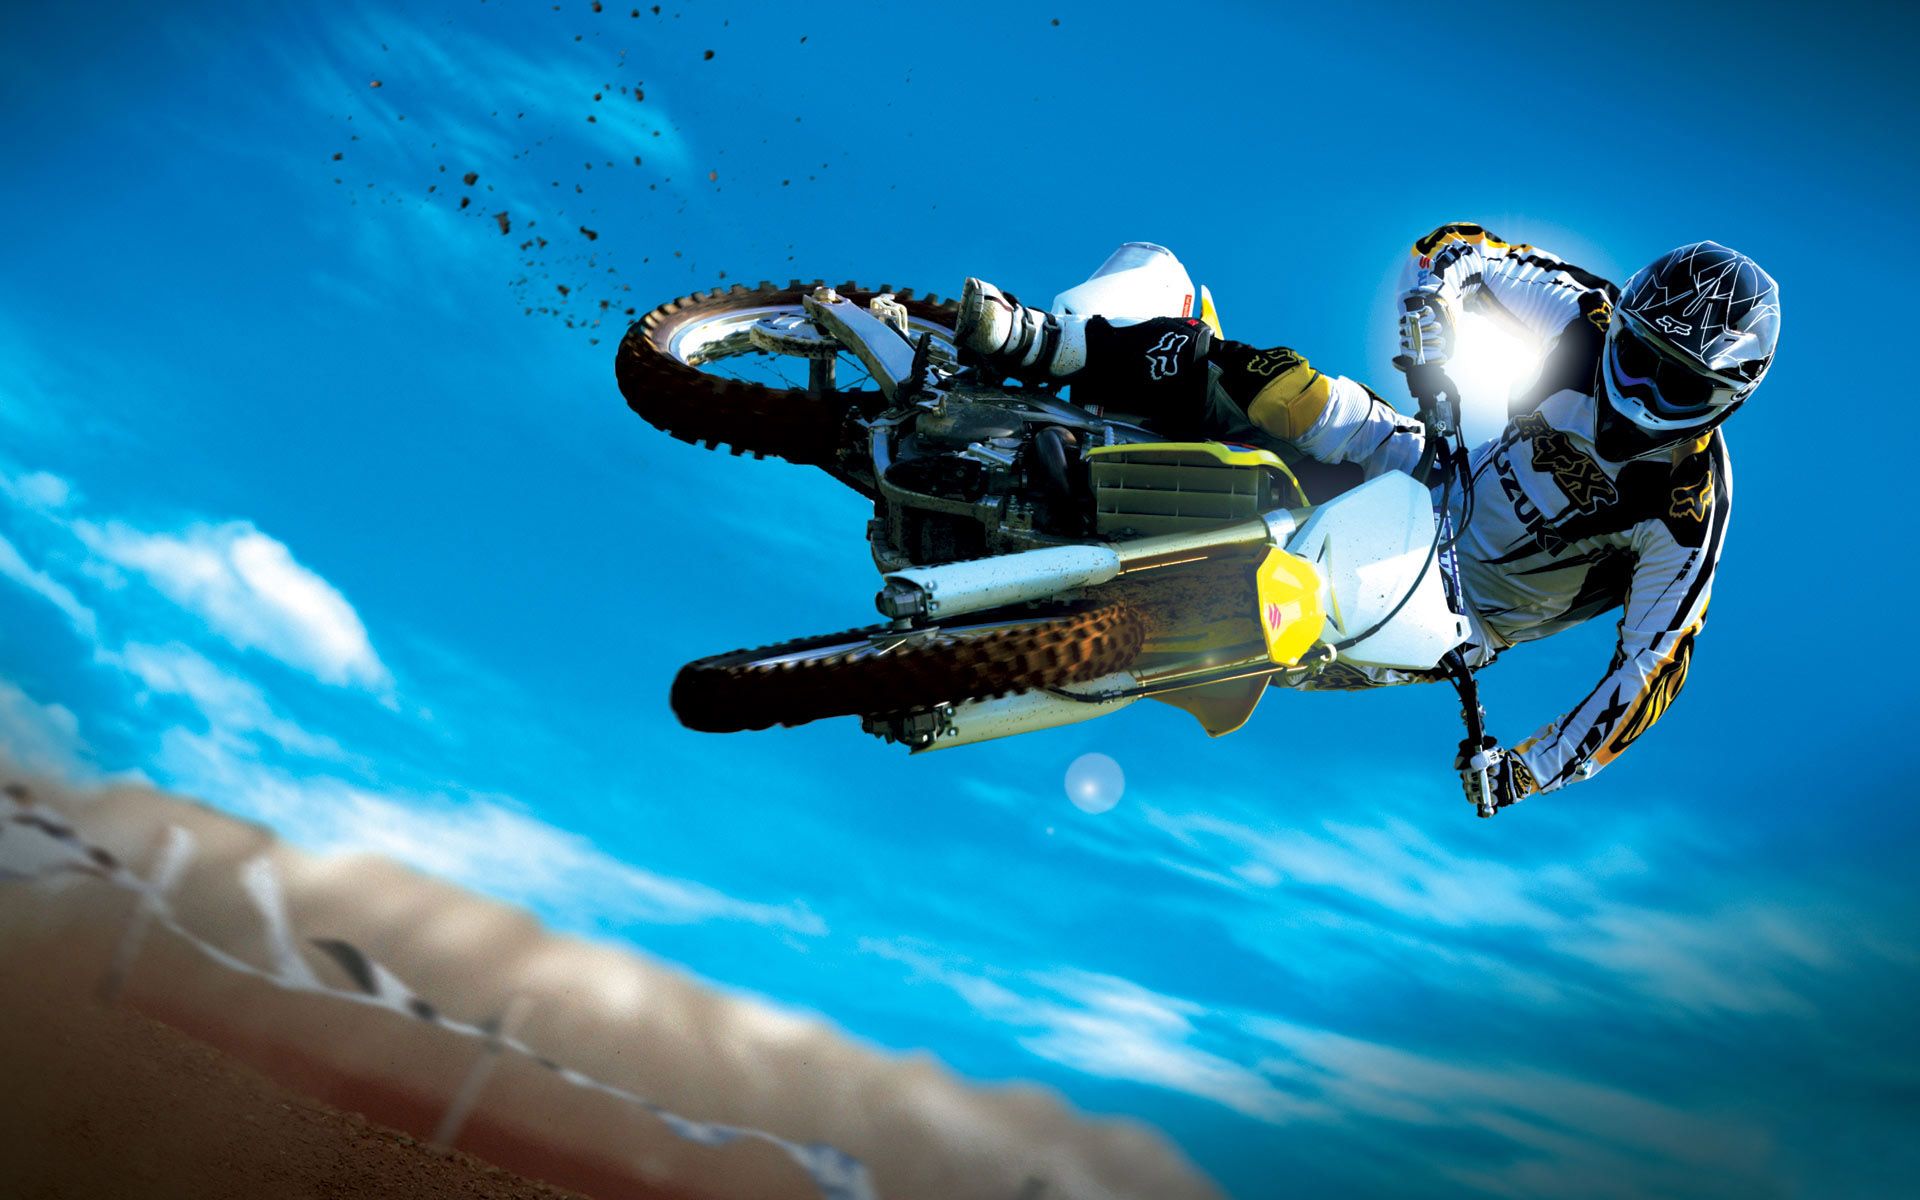 Amazing Motocross Bike Stunt Wallpapers | HD Wallpapers